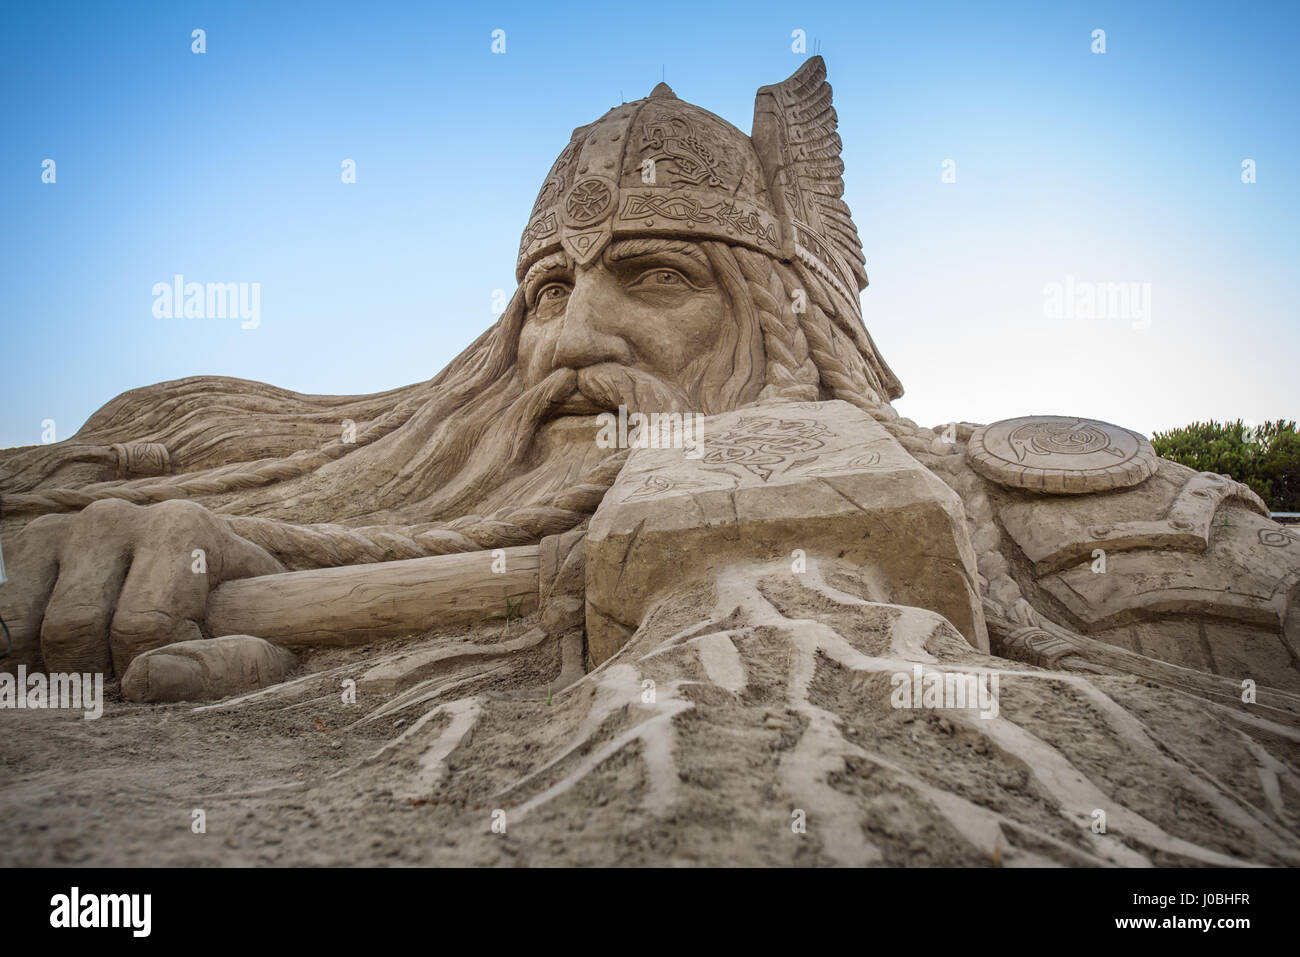 Thor. ANTALYA, TURKEY: FROM the Pyramids of Egypt to mighty Viking god ...